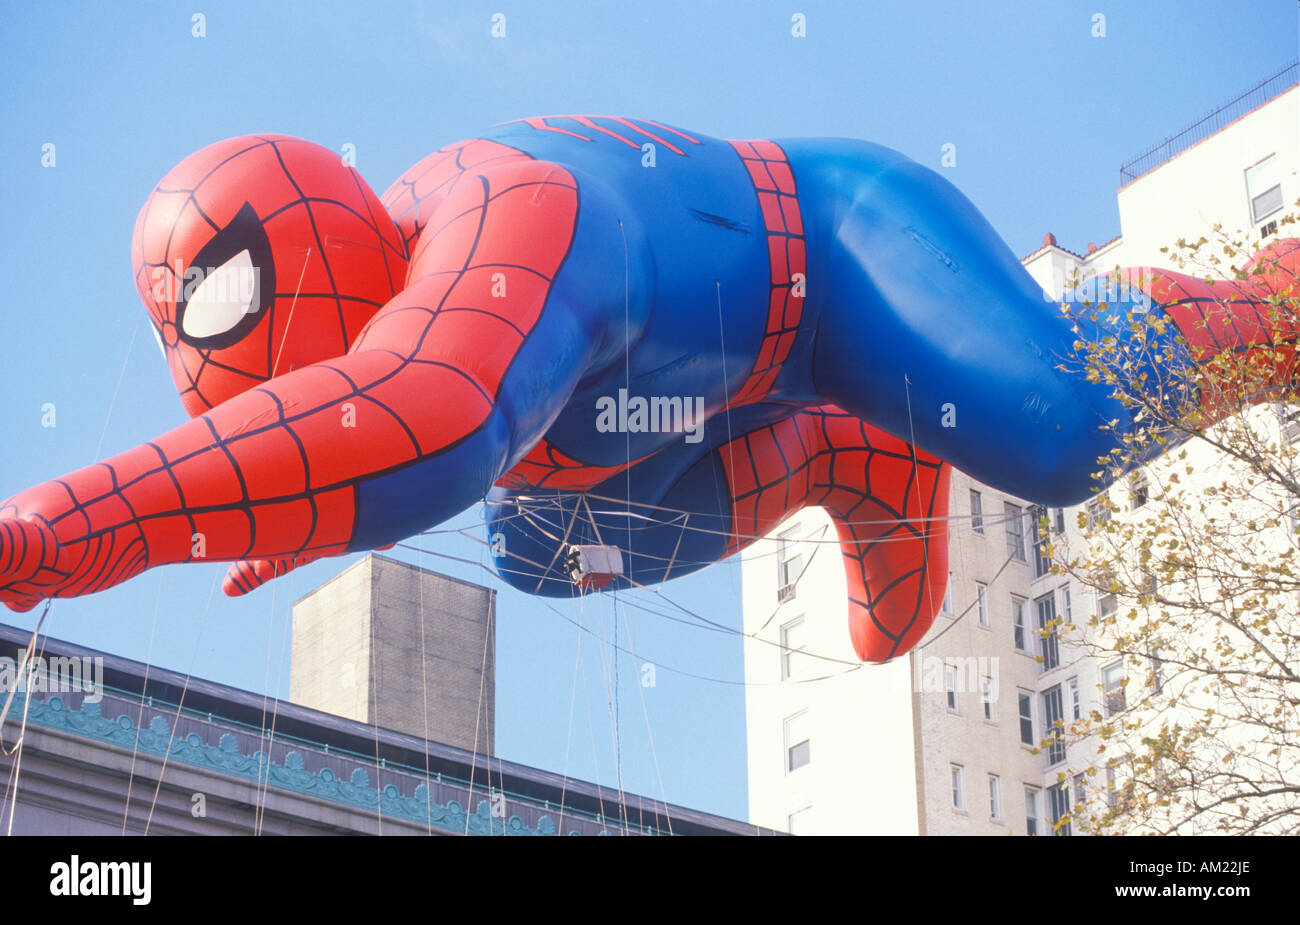 Spiderman Balloon in Macy s Thanksgiving Day Parade New York City New York Stock Photo